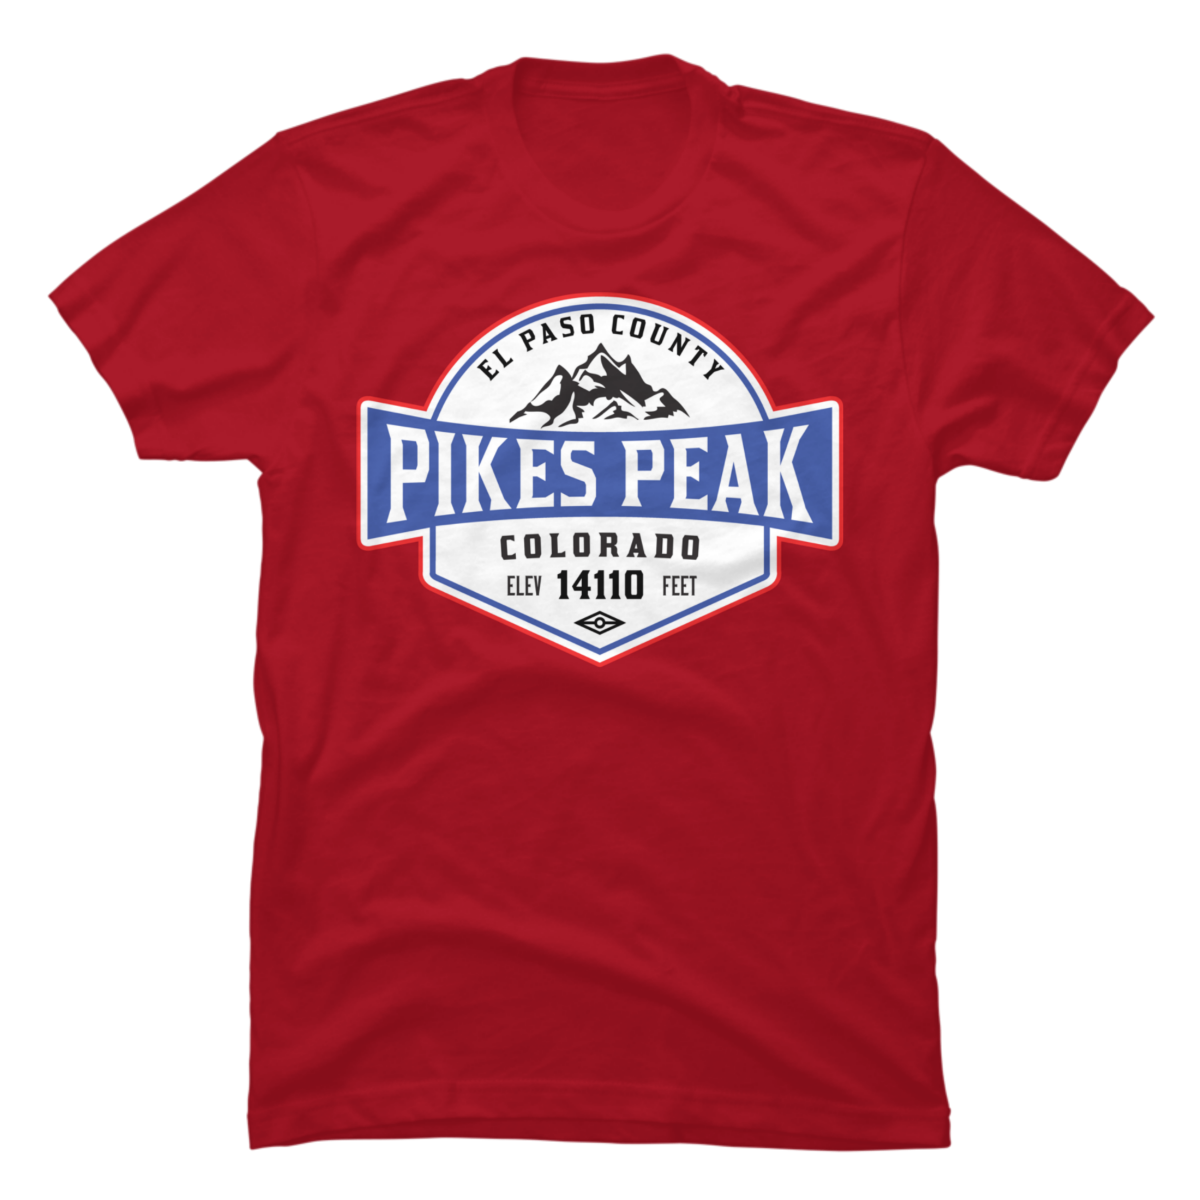 pikes peak shirts